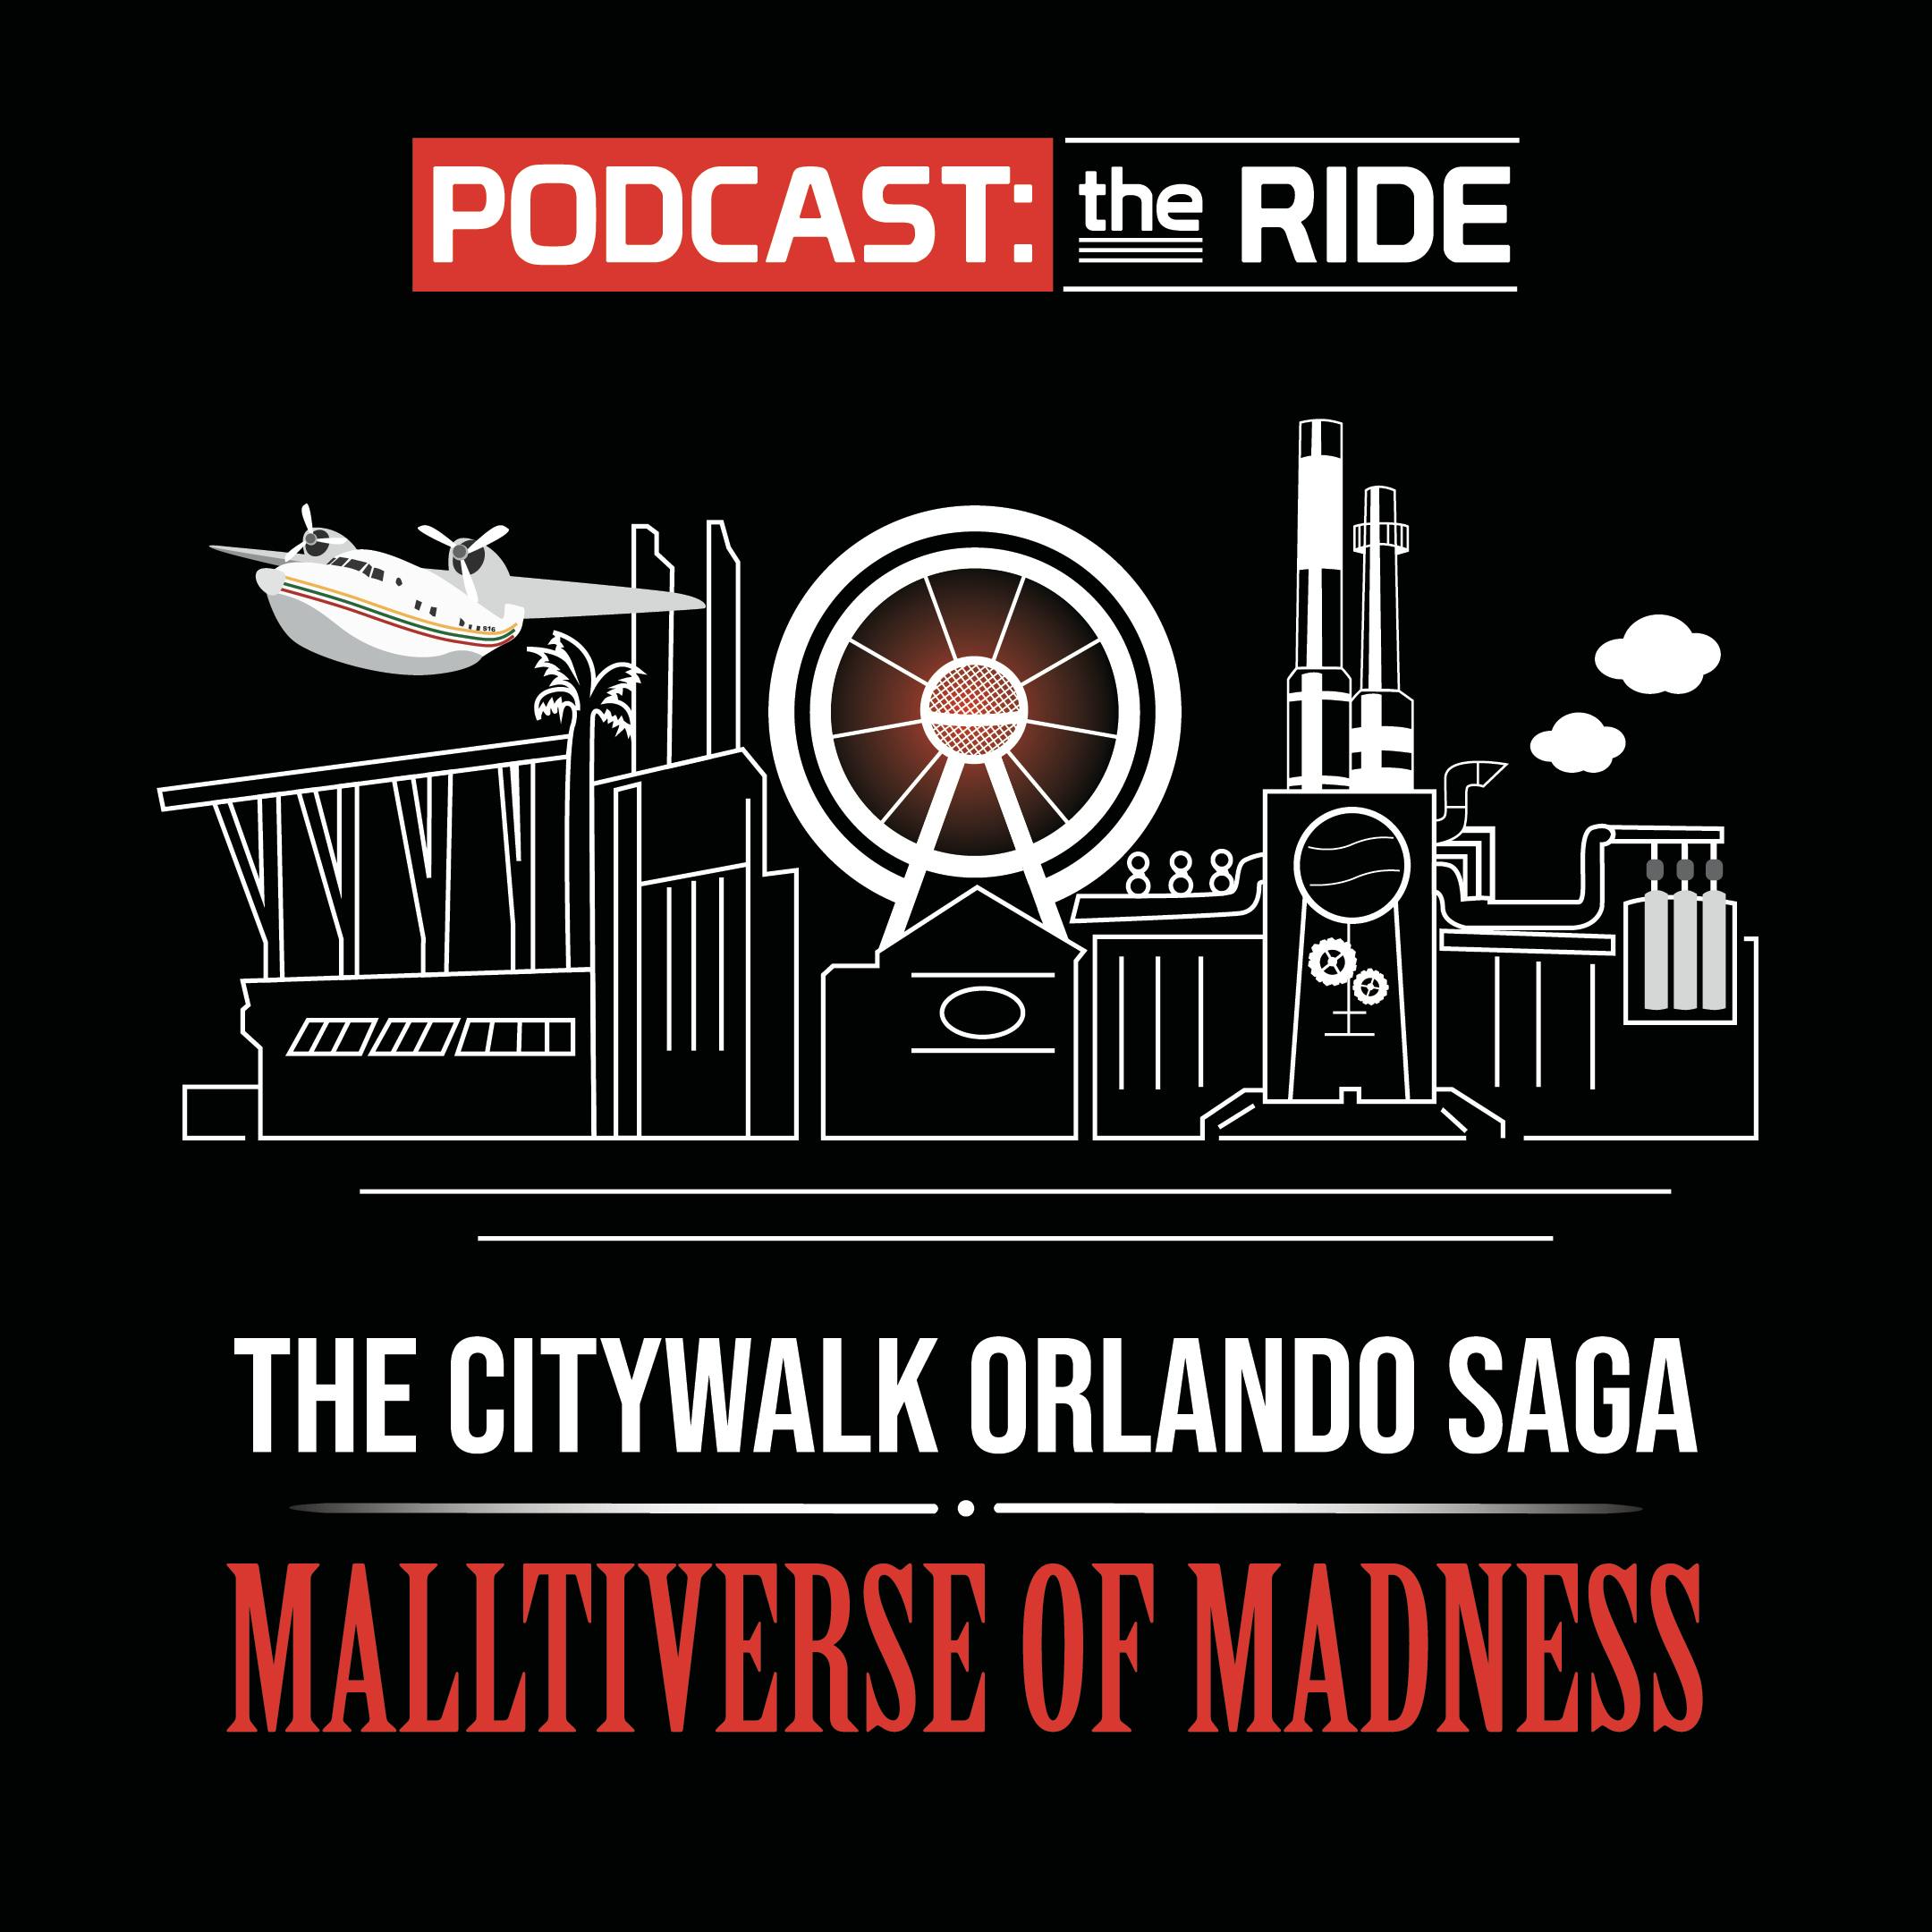 The CityWalk Orlando Saga: Malltiverse of Madness 4 - 3 with Joe Kwaczala and Brett Boham